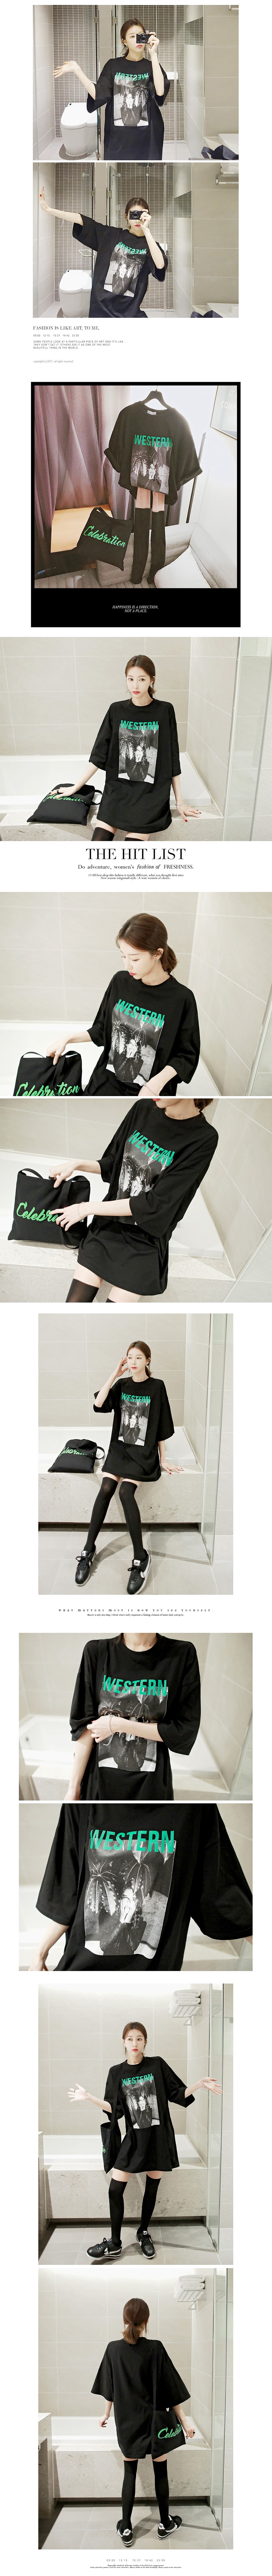 KOREA WESTERN Oversized T-shirt Dress #Black One Size(Free) [Free Shipping]